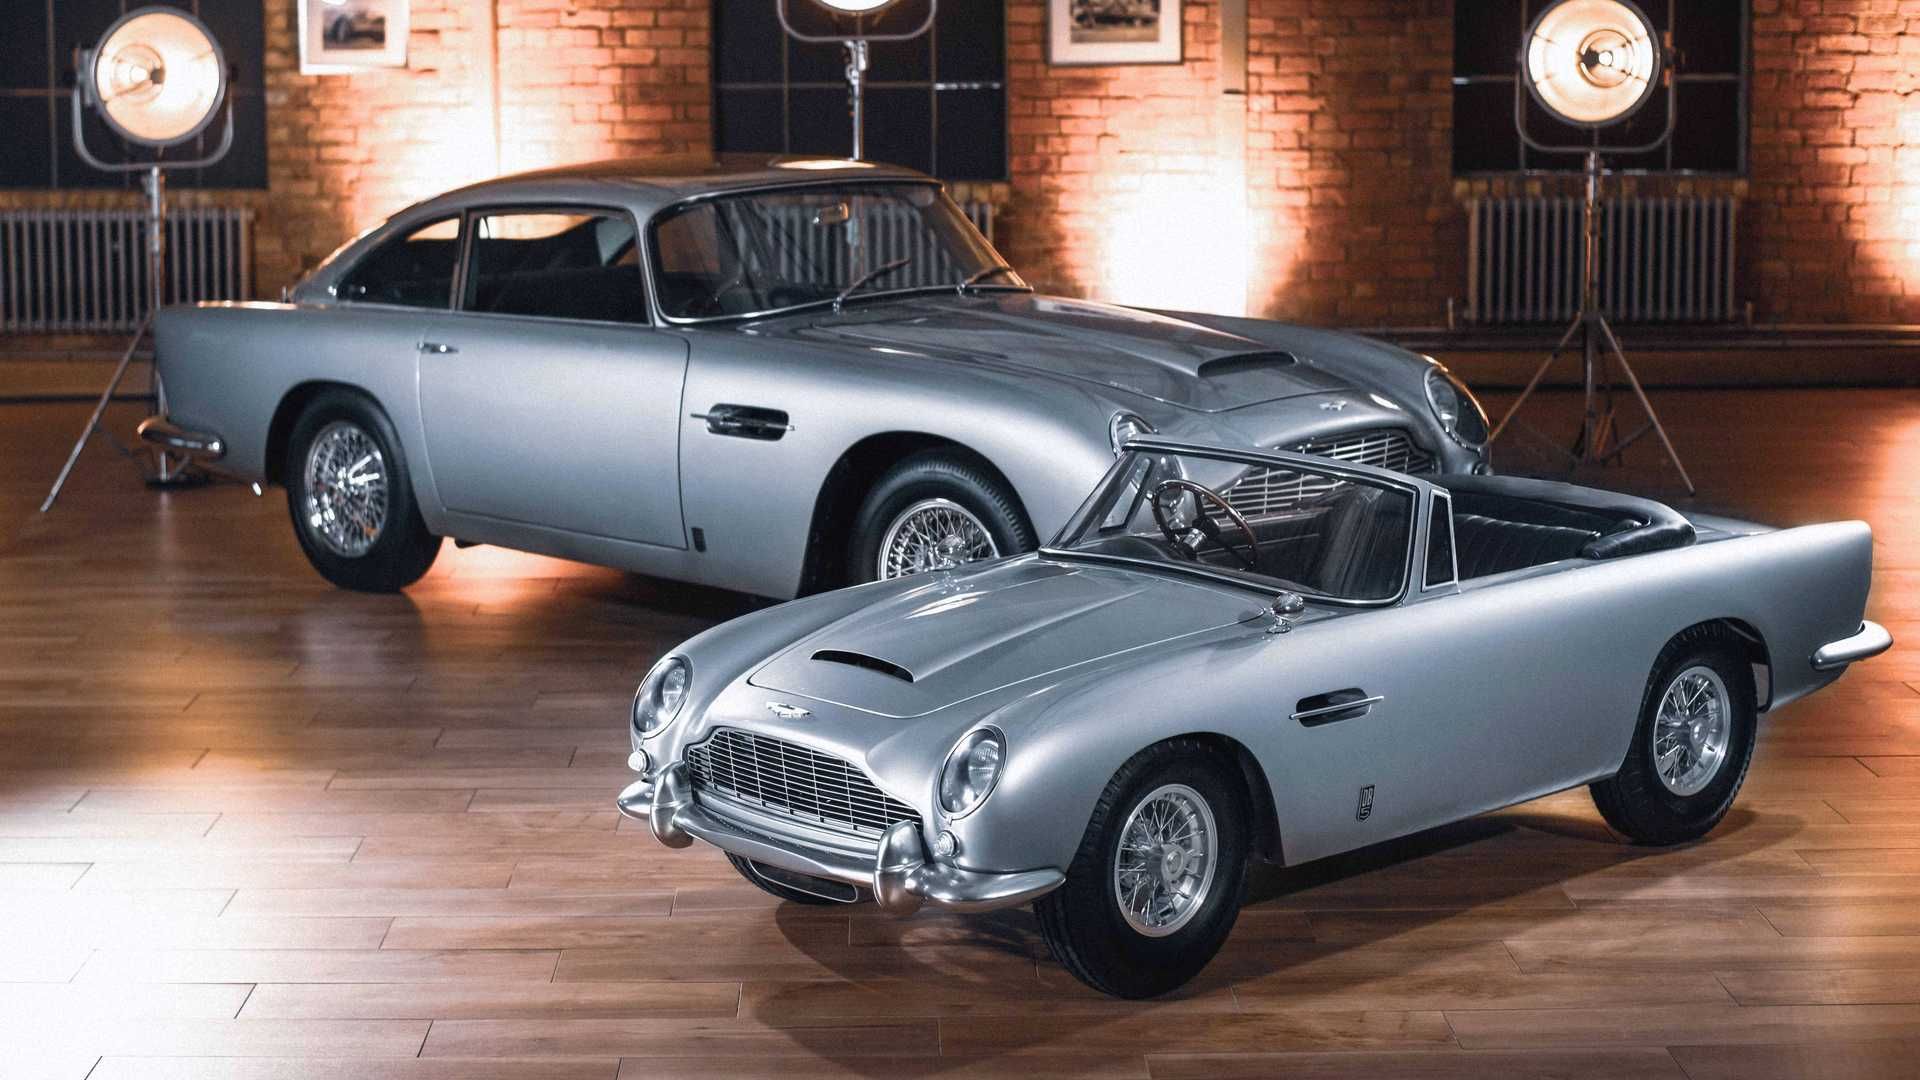 Aston Martin DB5 Junior Miniature EV for Kids - Pricing, Specs